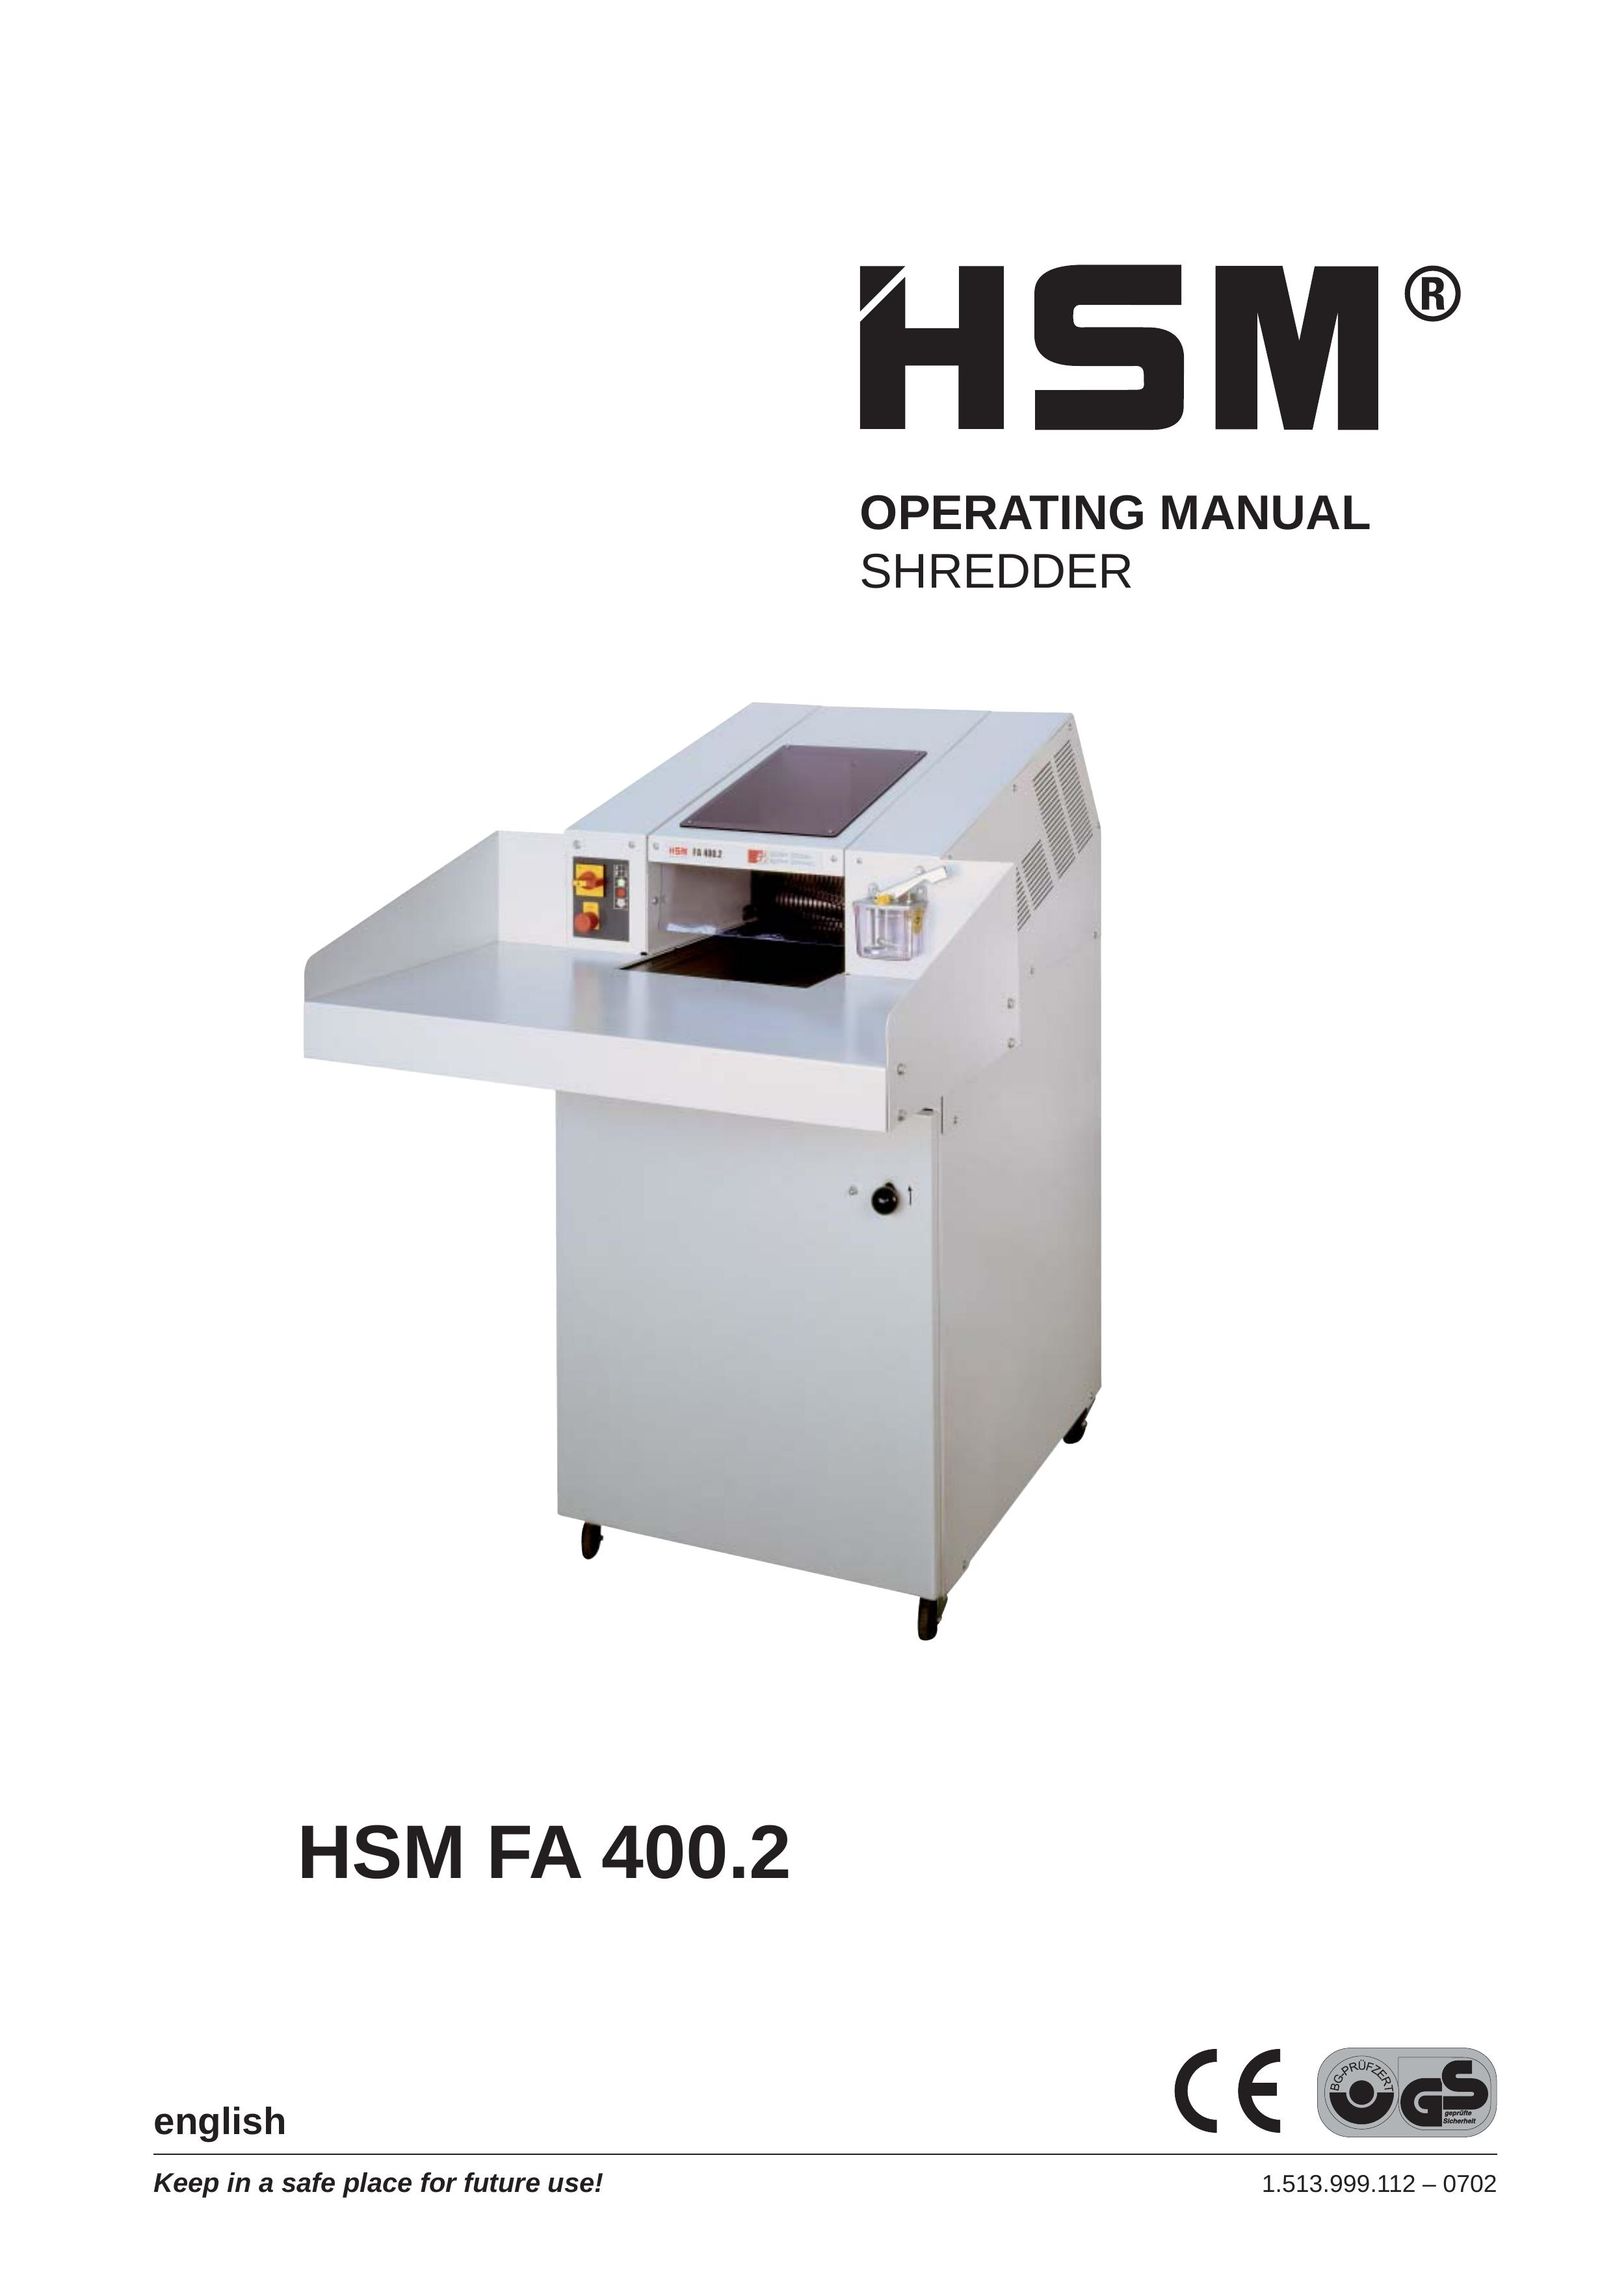 HSM HSM FA 400.2 Paper Shredder User Manual